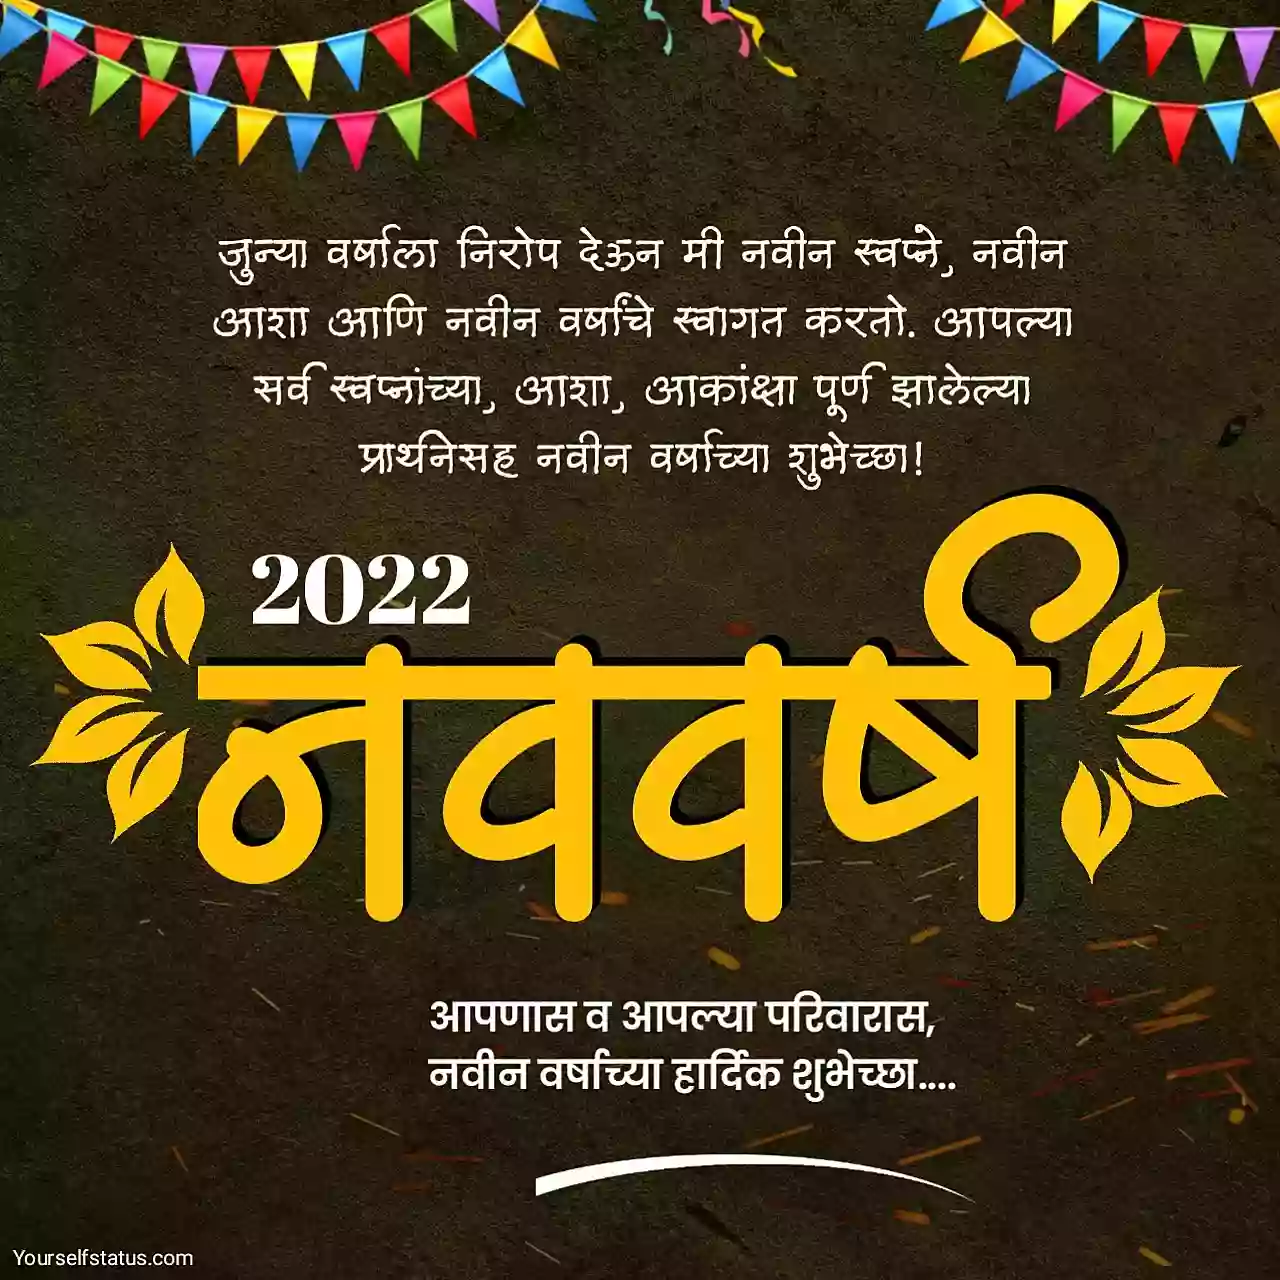 Happy new year quotes in marathi